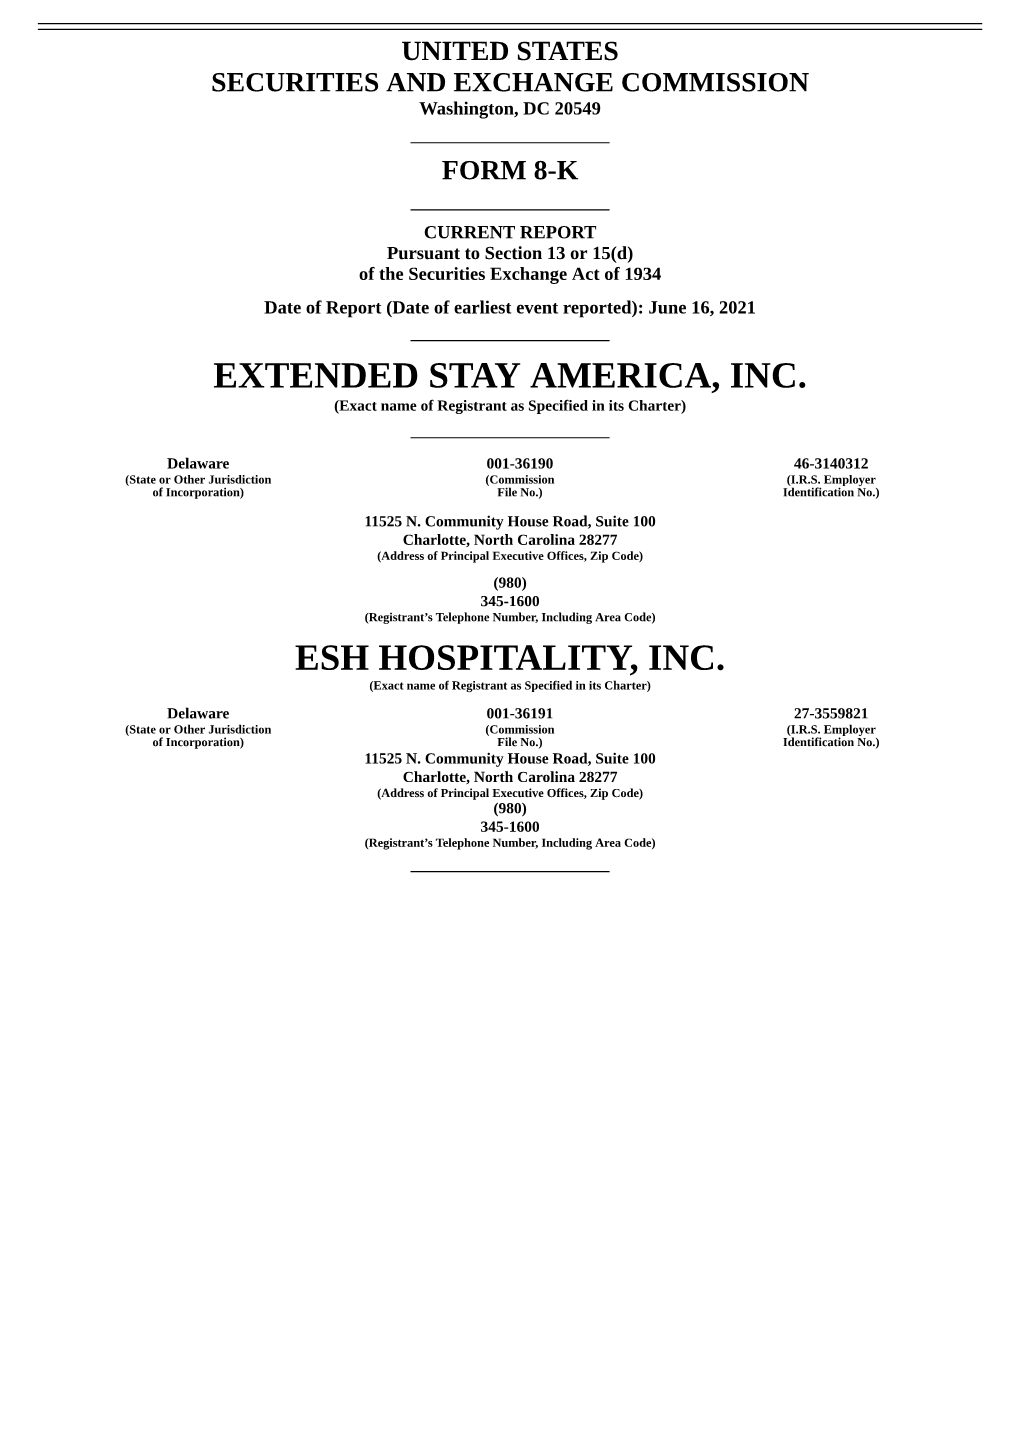 Extended Stay America, Inc. Esh Hospitality, Inc